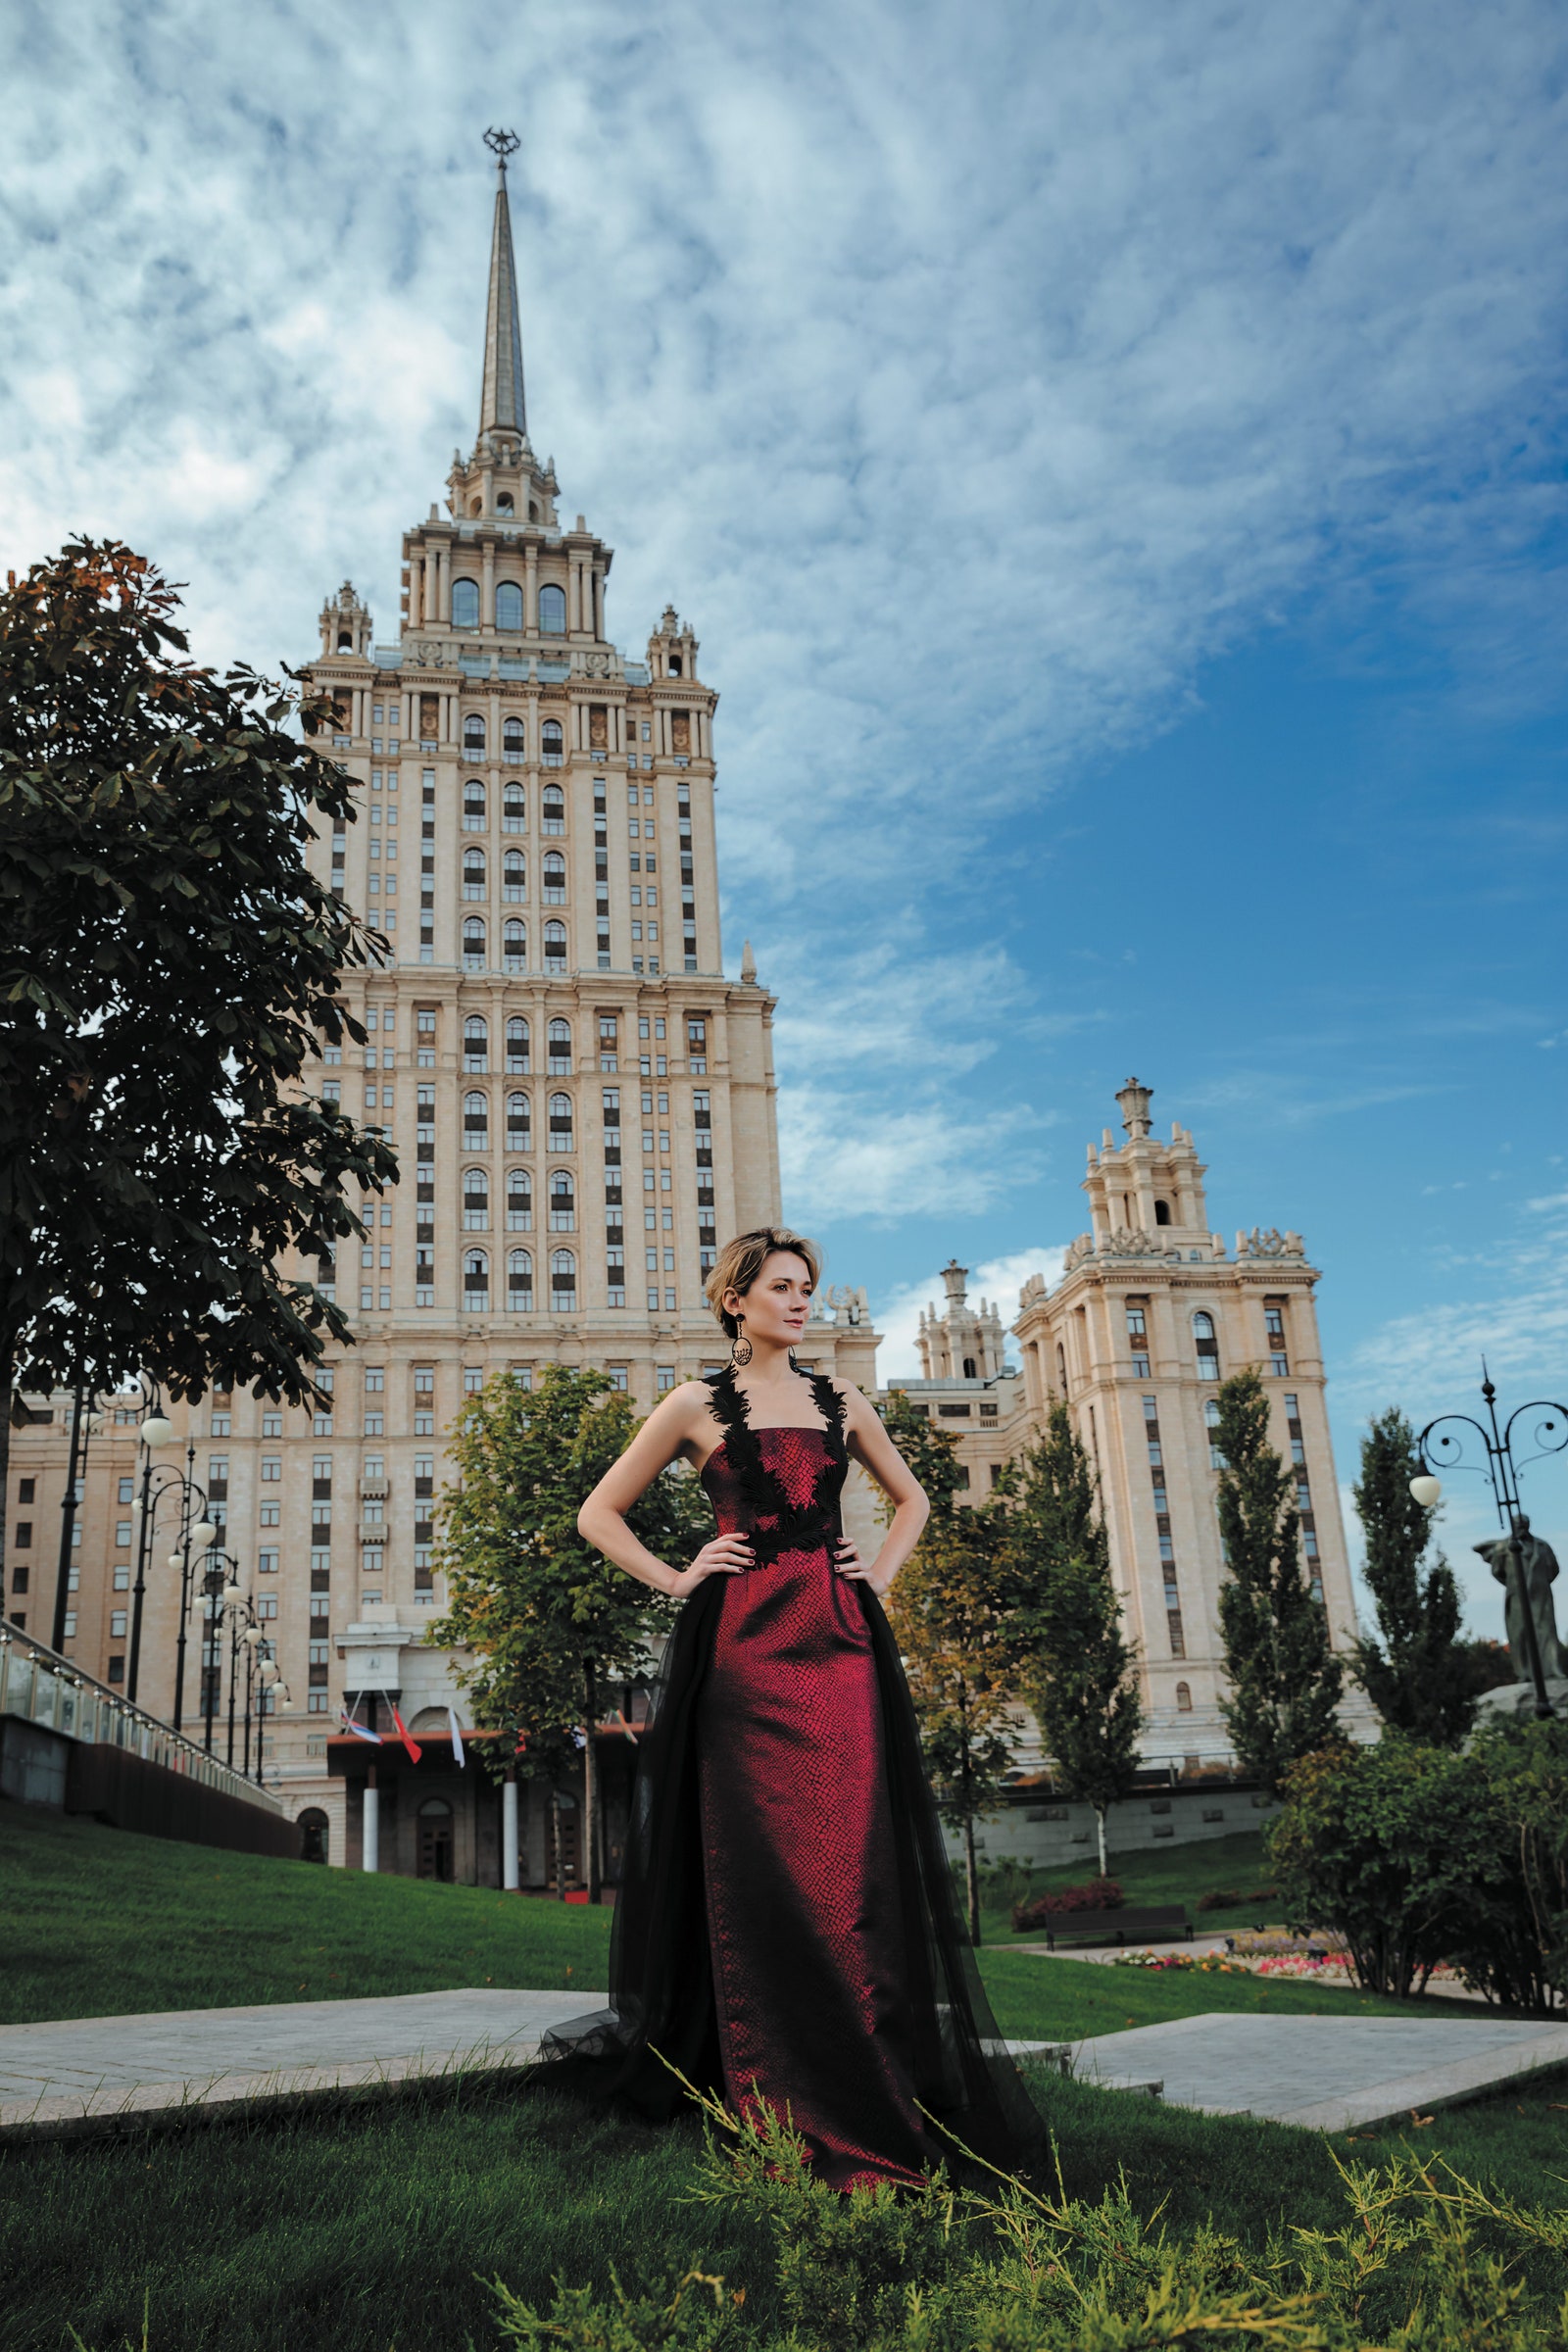 Гостиница «Украина» — Надежда Михалкова